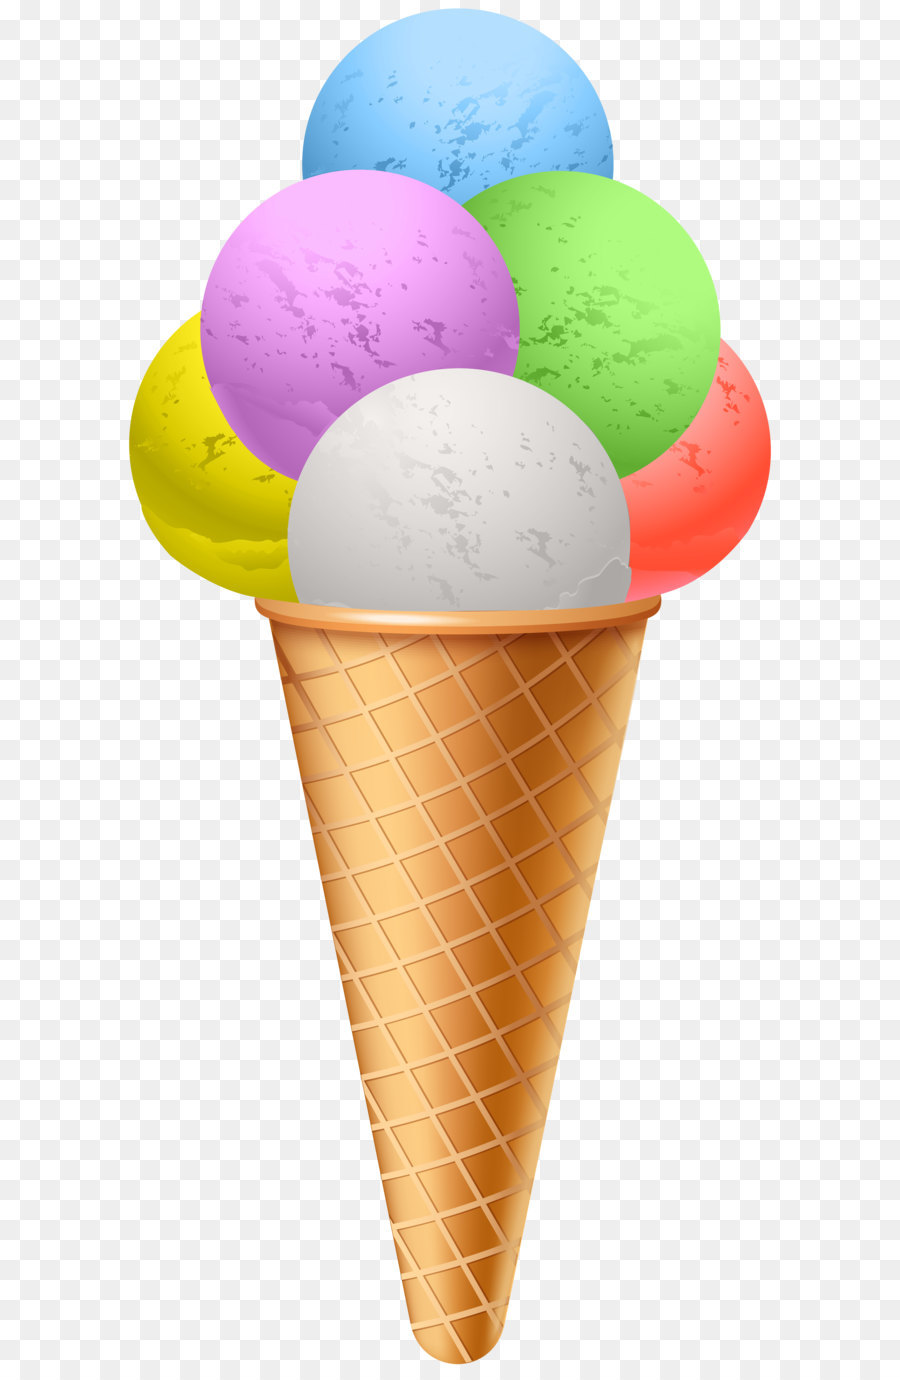 Ice cream cone Gelato Ice pop - Ice Cream Transparent PNG Clip Art Image png download - 3793*8000 - Free Transparent Ice Cream png Download.